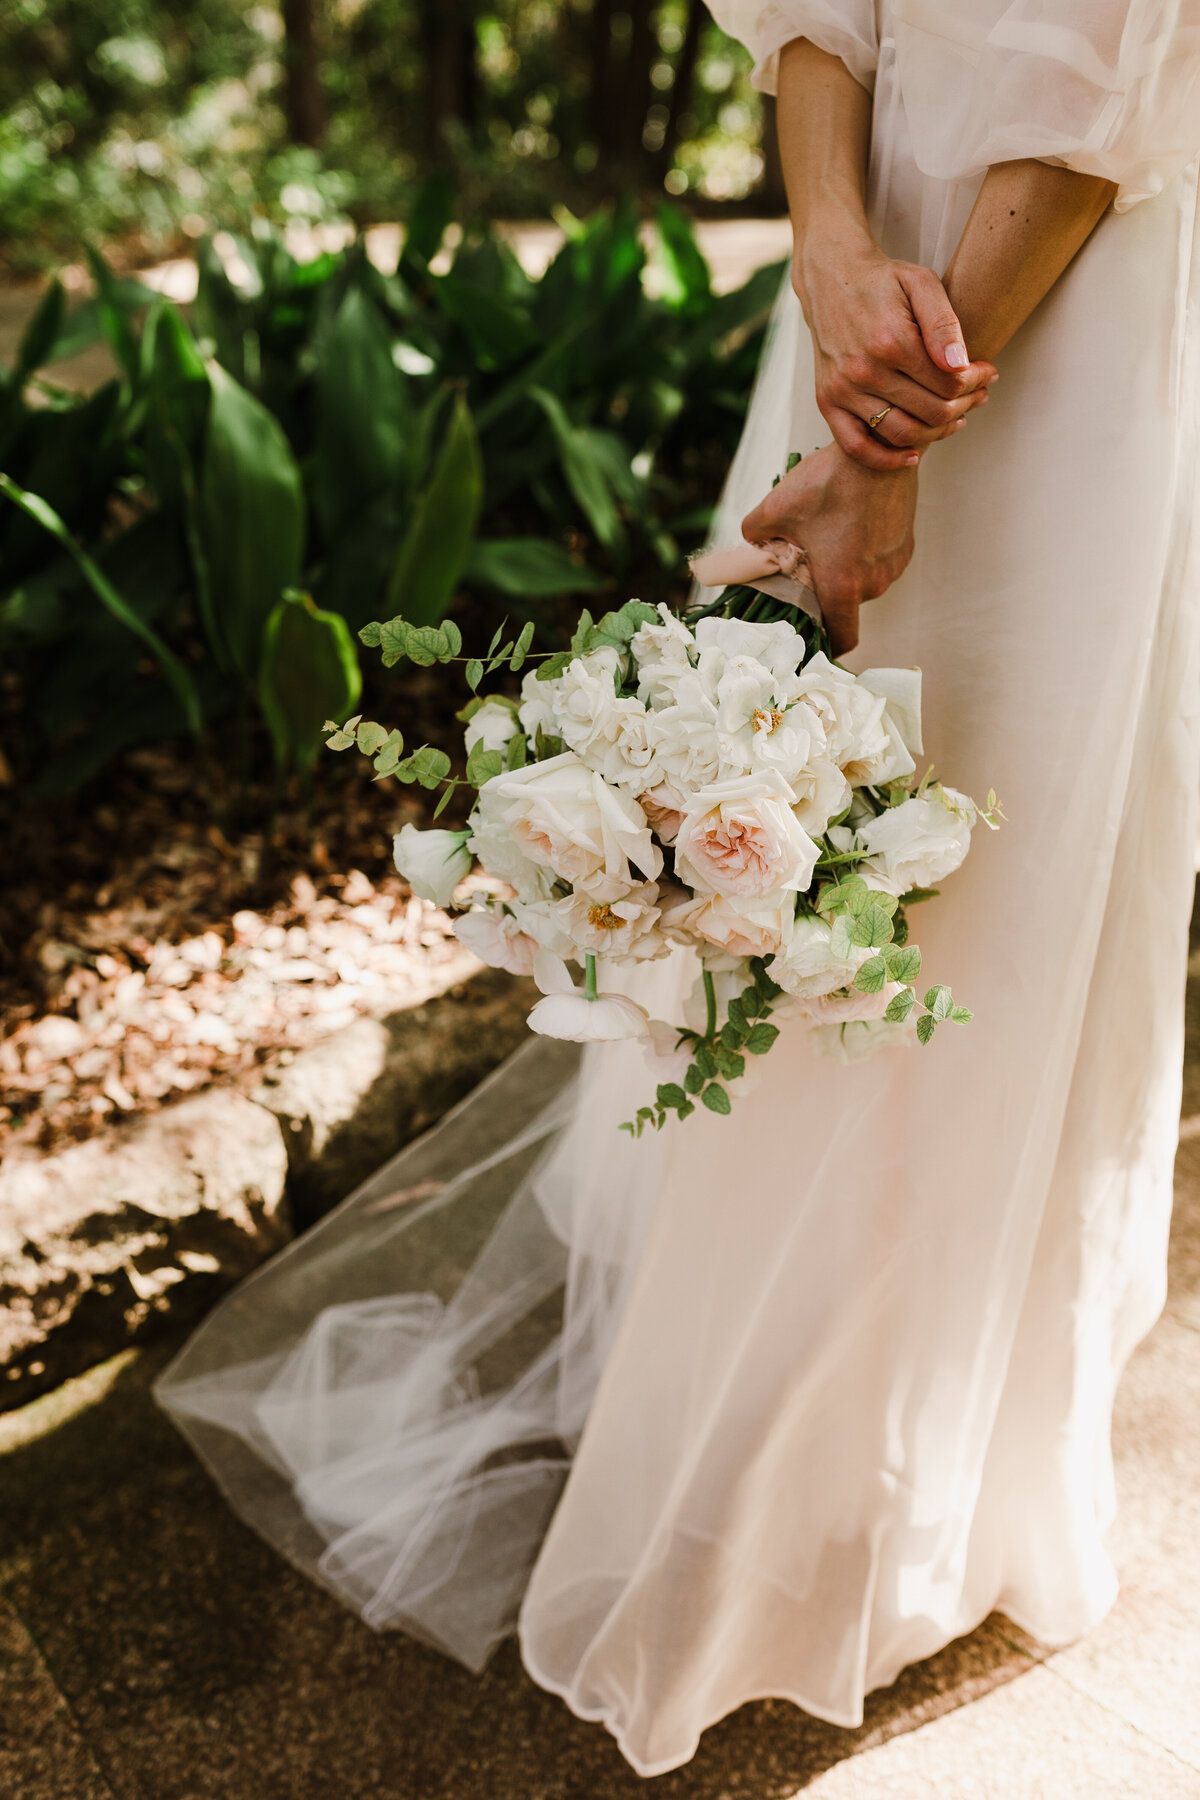 Bride holding bouquet of white florals